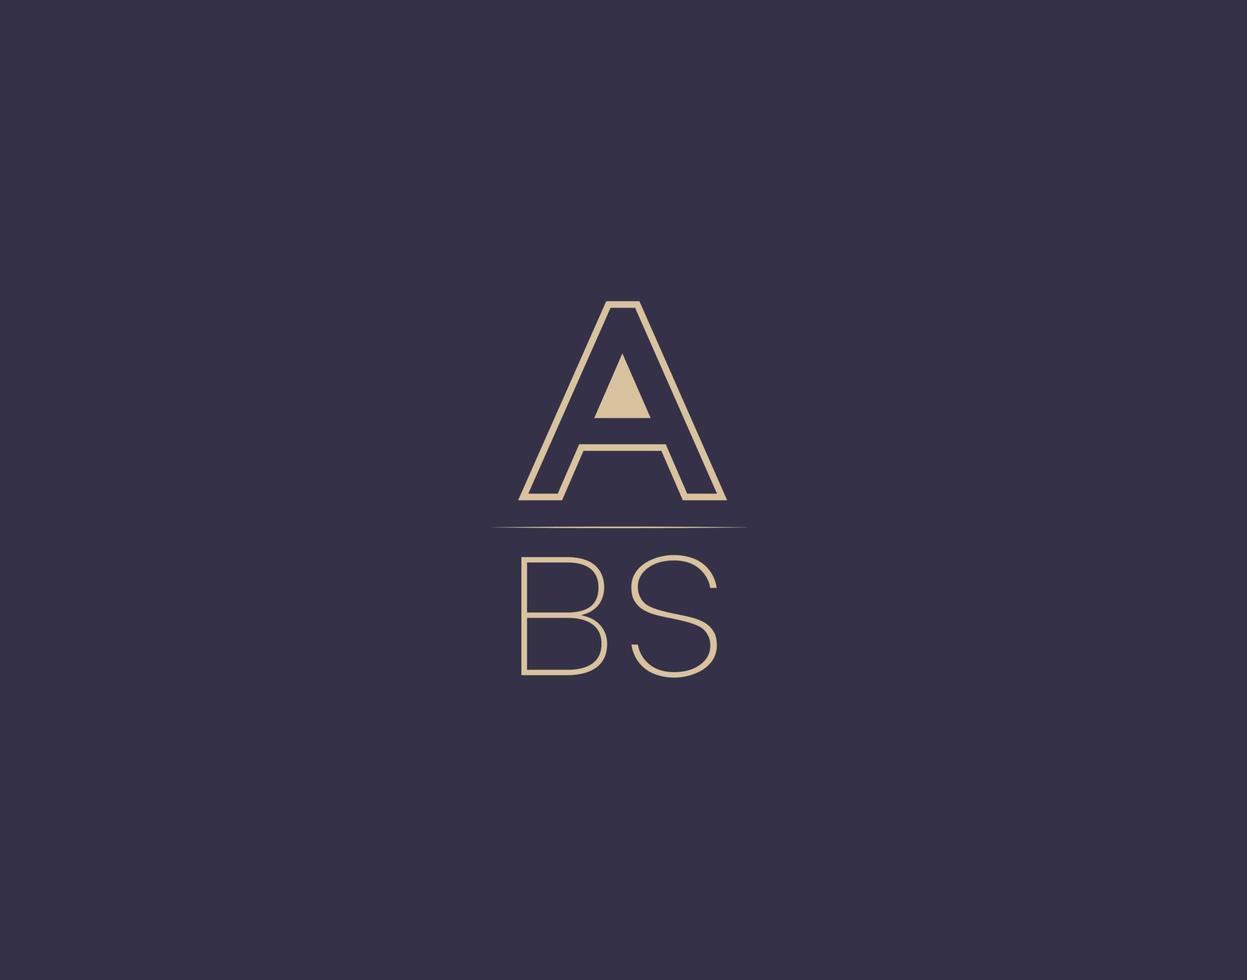 ABS letter logo design modern minimalist vector images